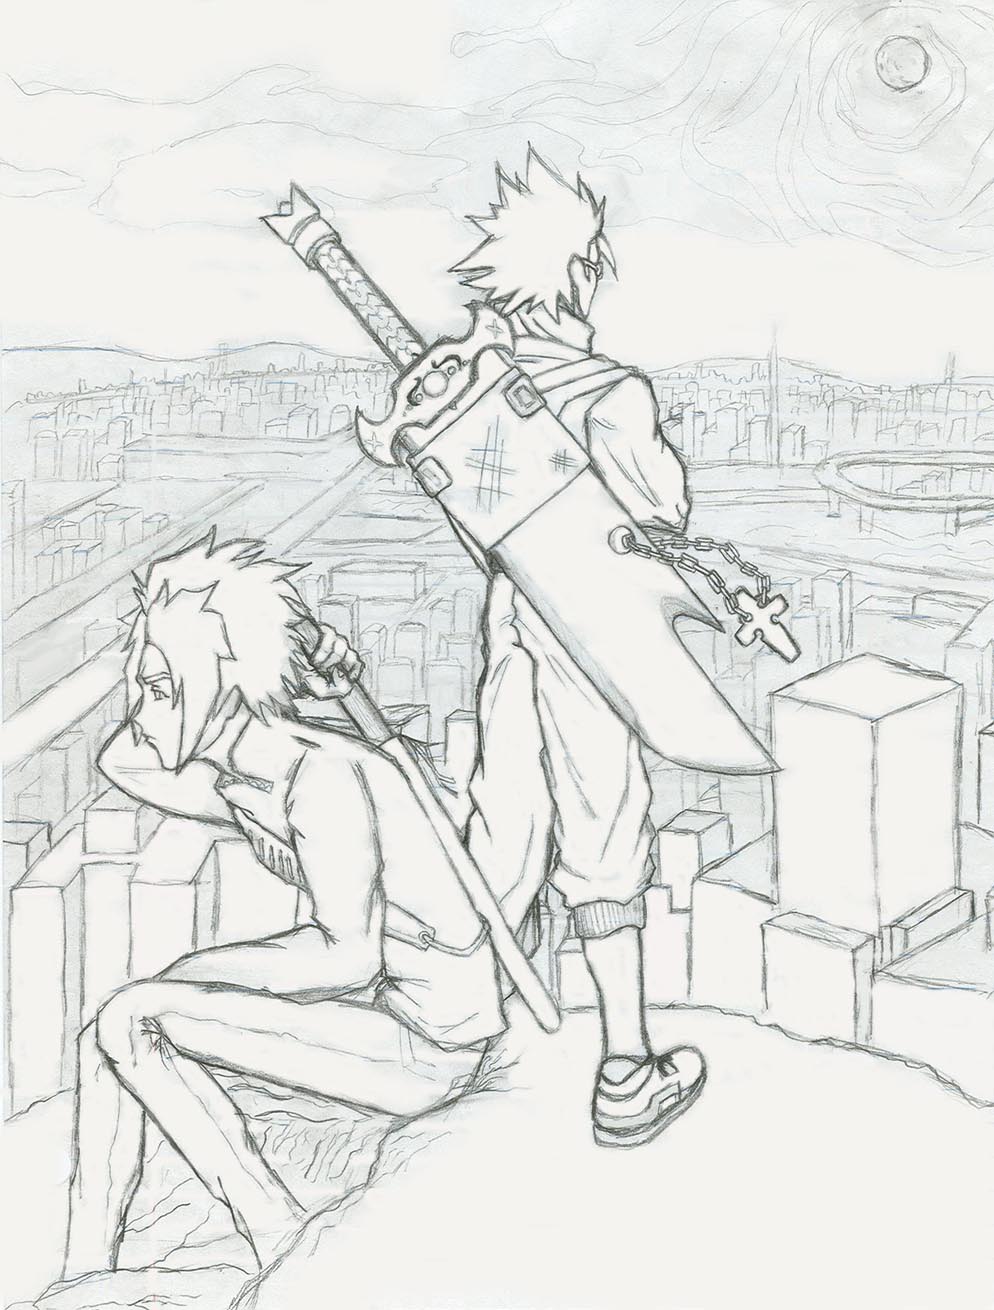 Chosokabe and Yoshikuni Overlooking the City by knucks922